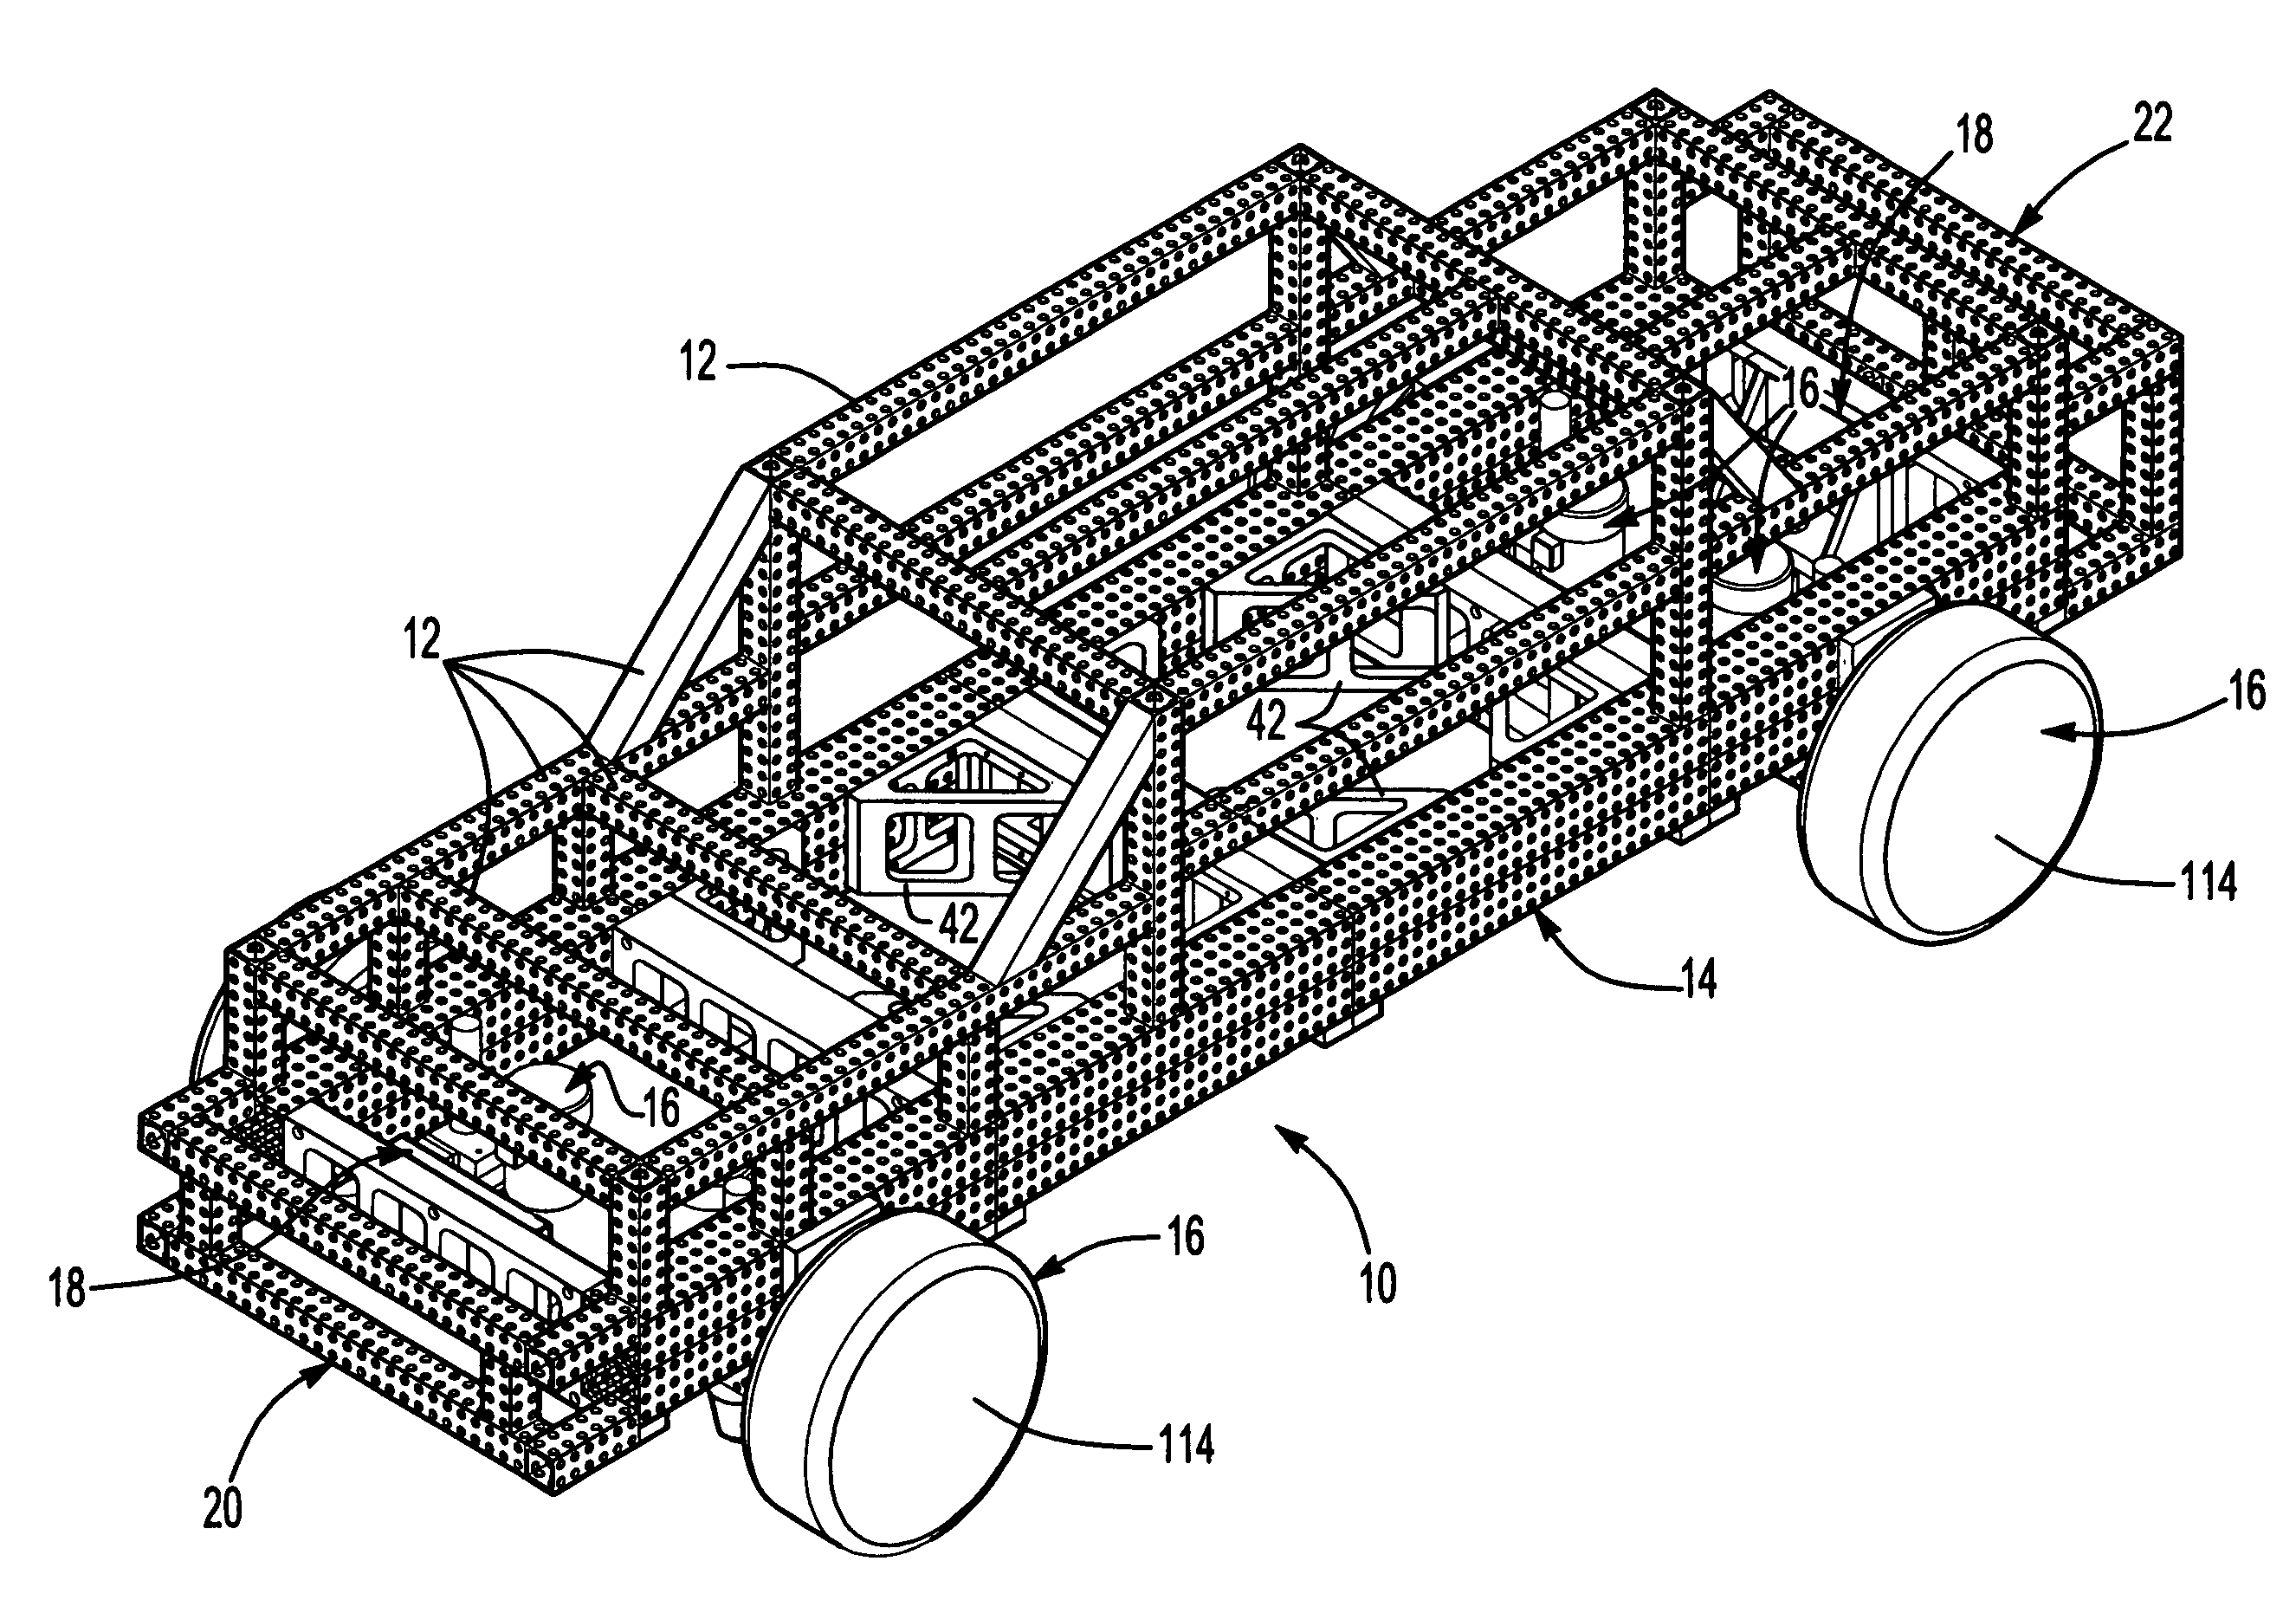 Modular base assembly for vehicle model-making